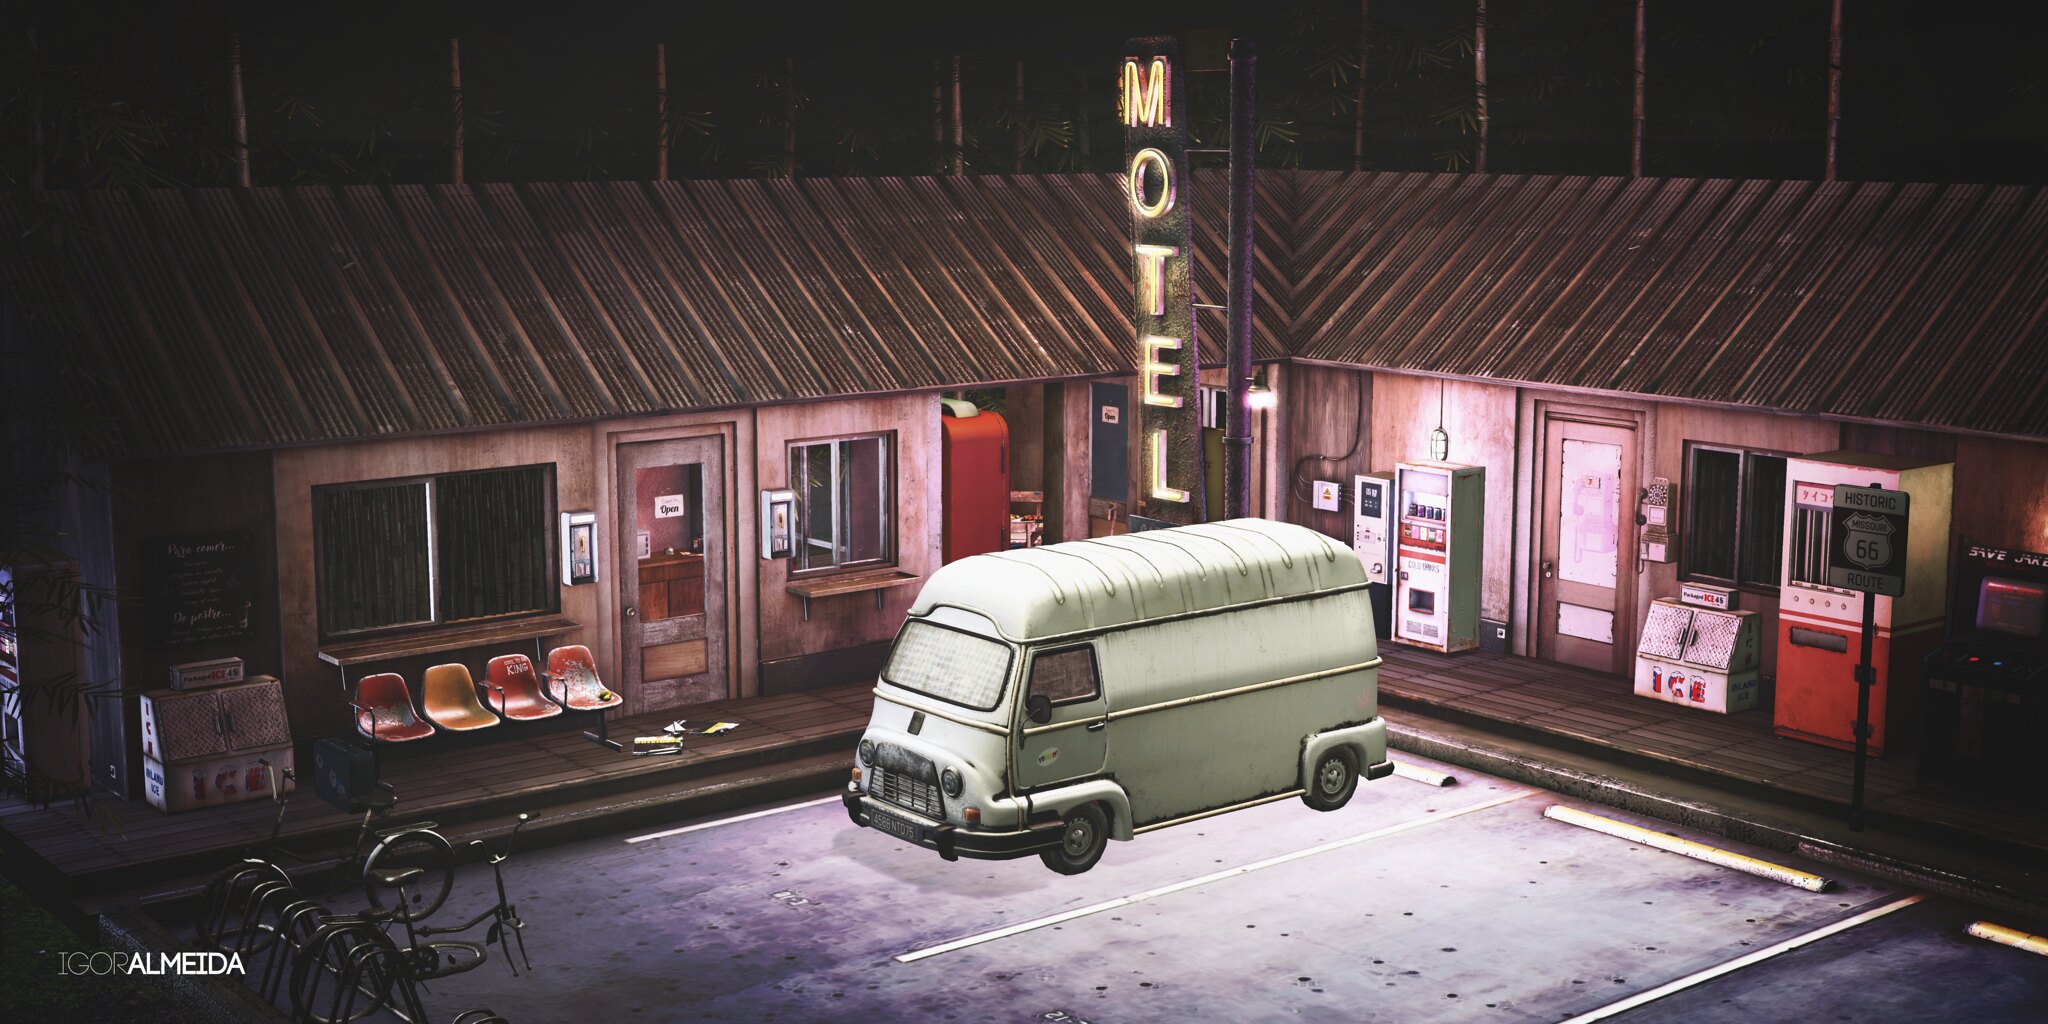 Motel!